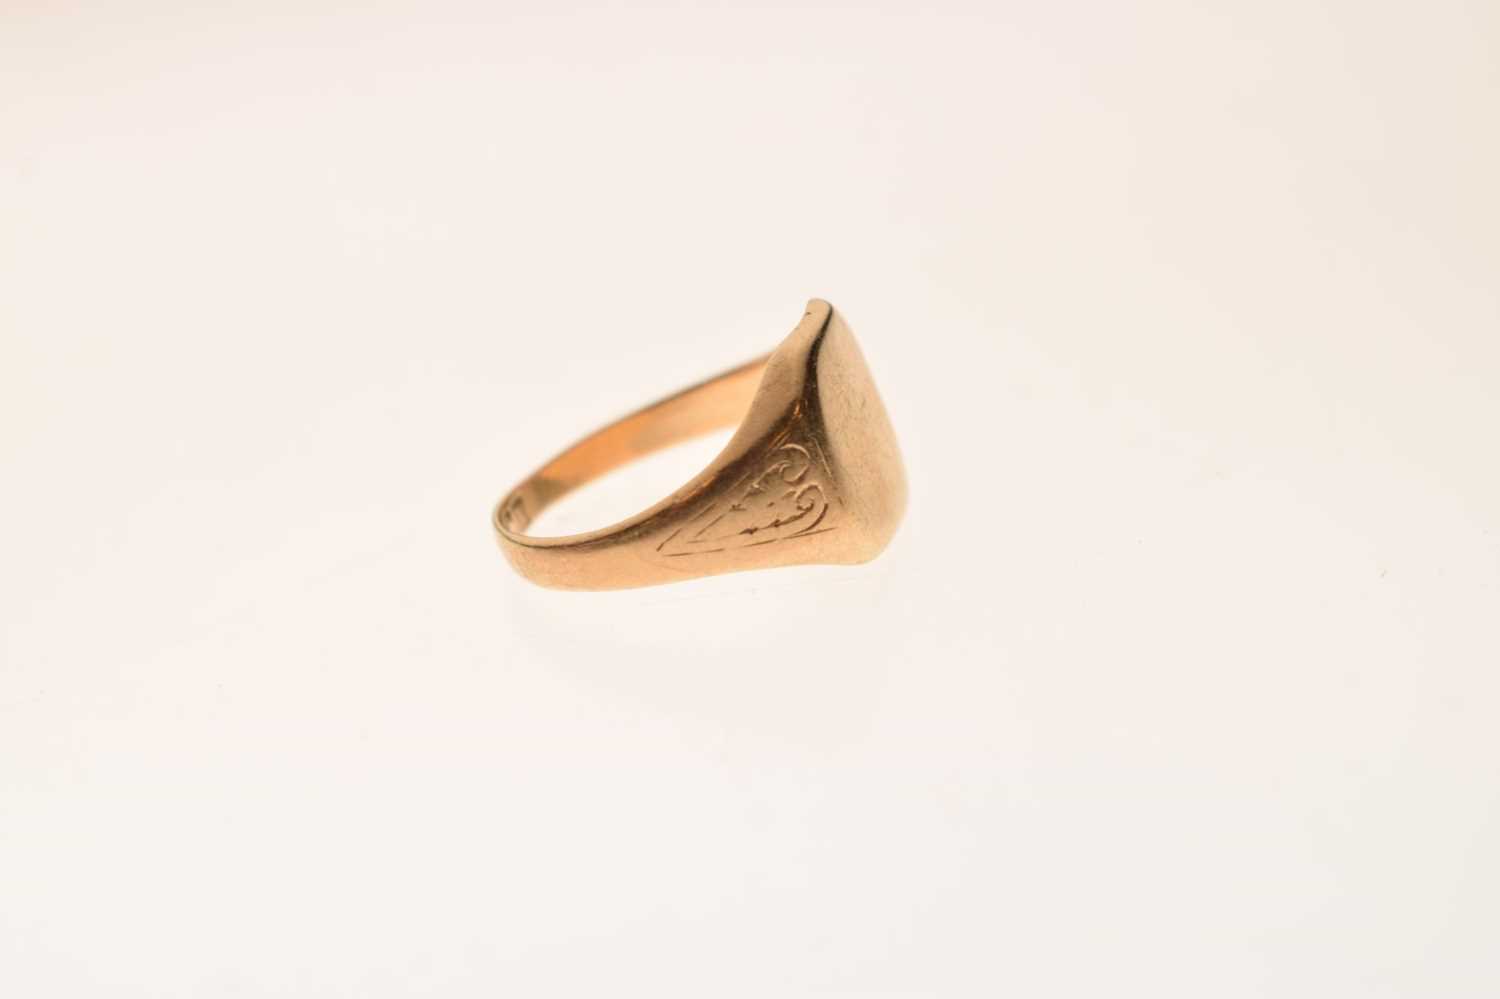 9ct gold signet ring - Image 4 of 6